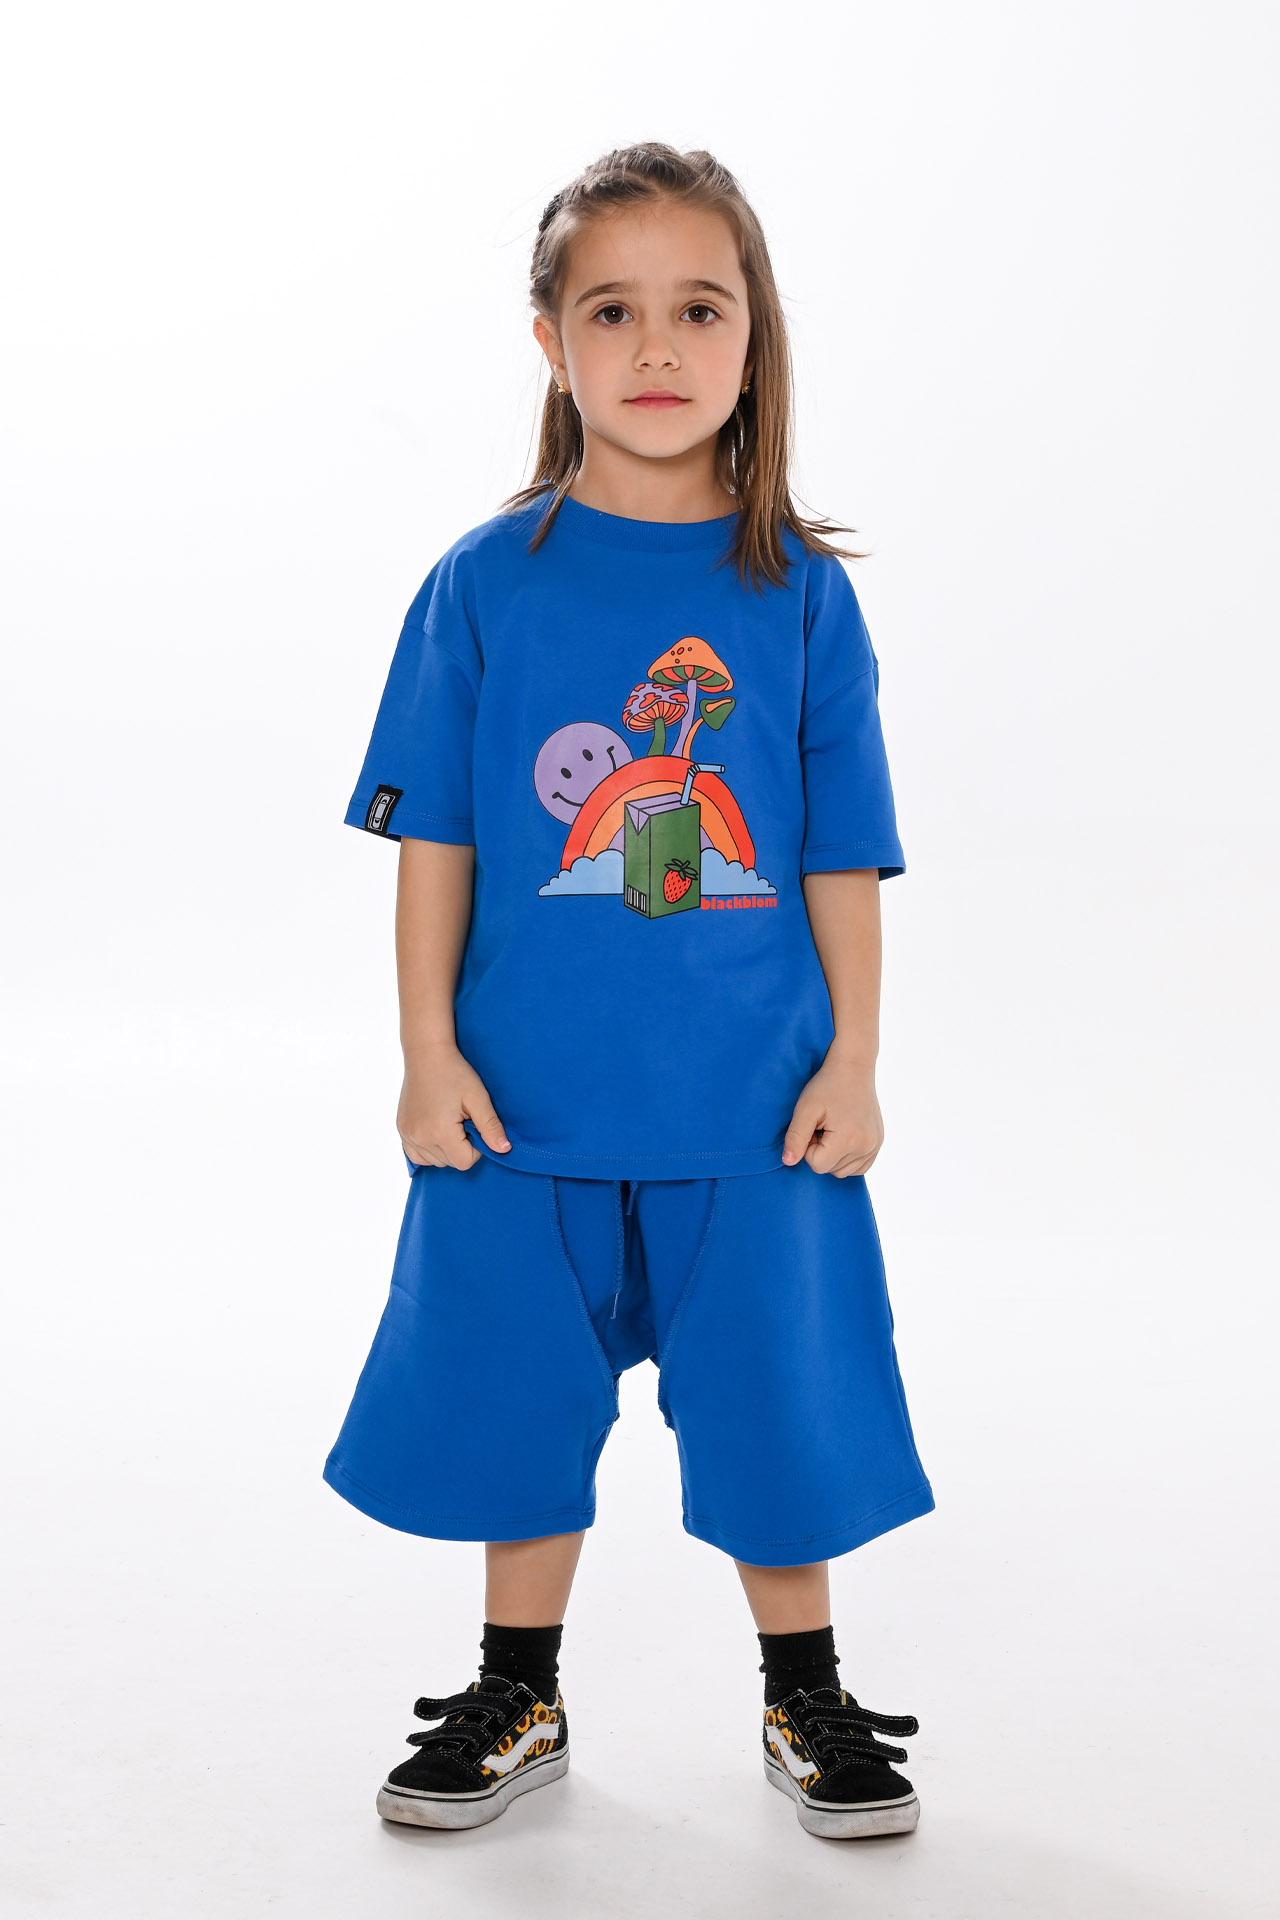 Blackblom Kids Unisex T-shirt Rainbow